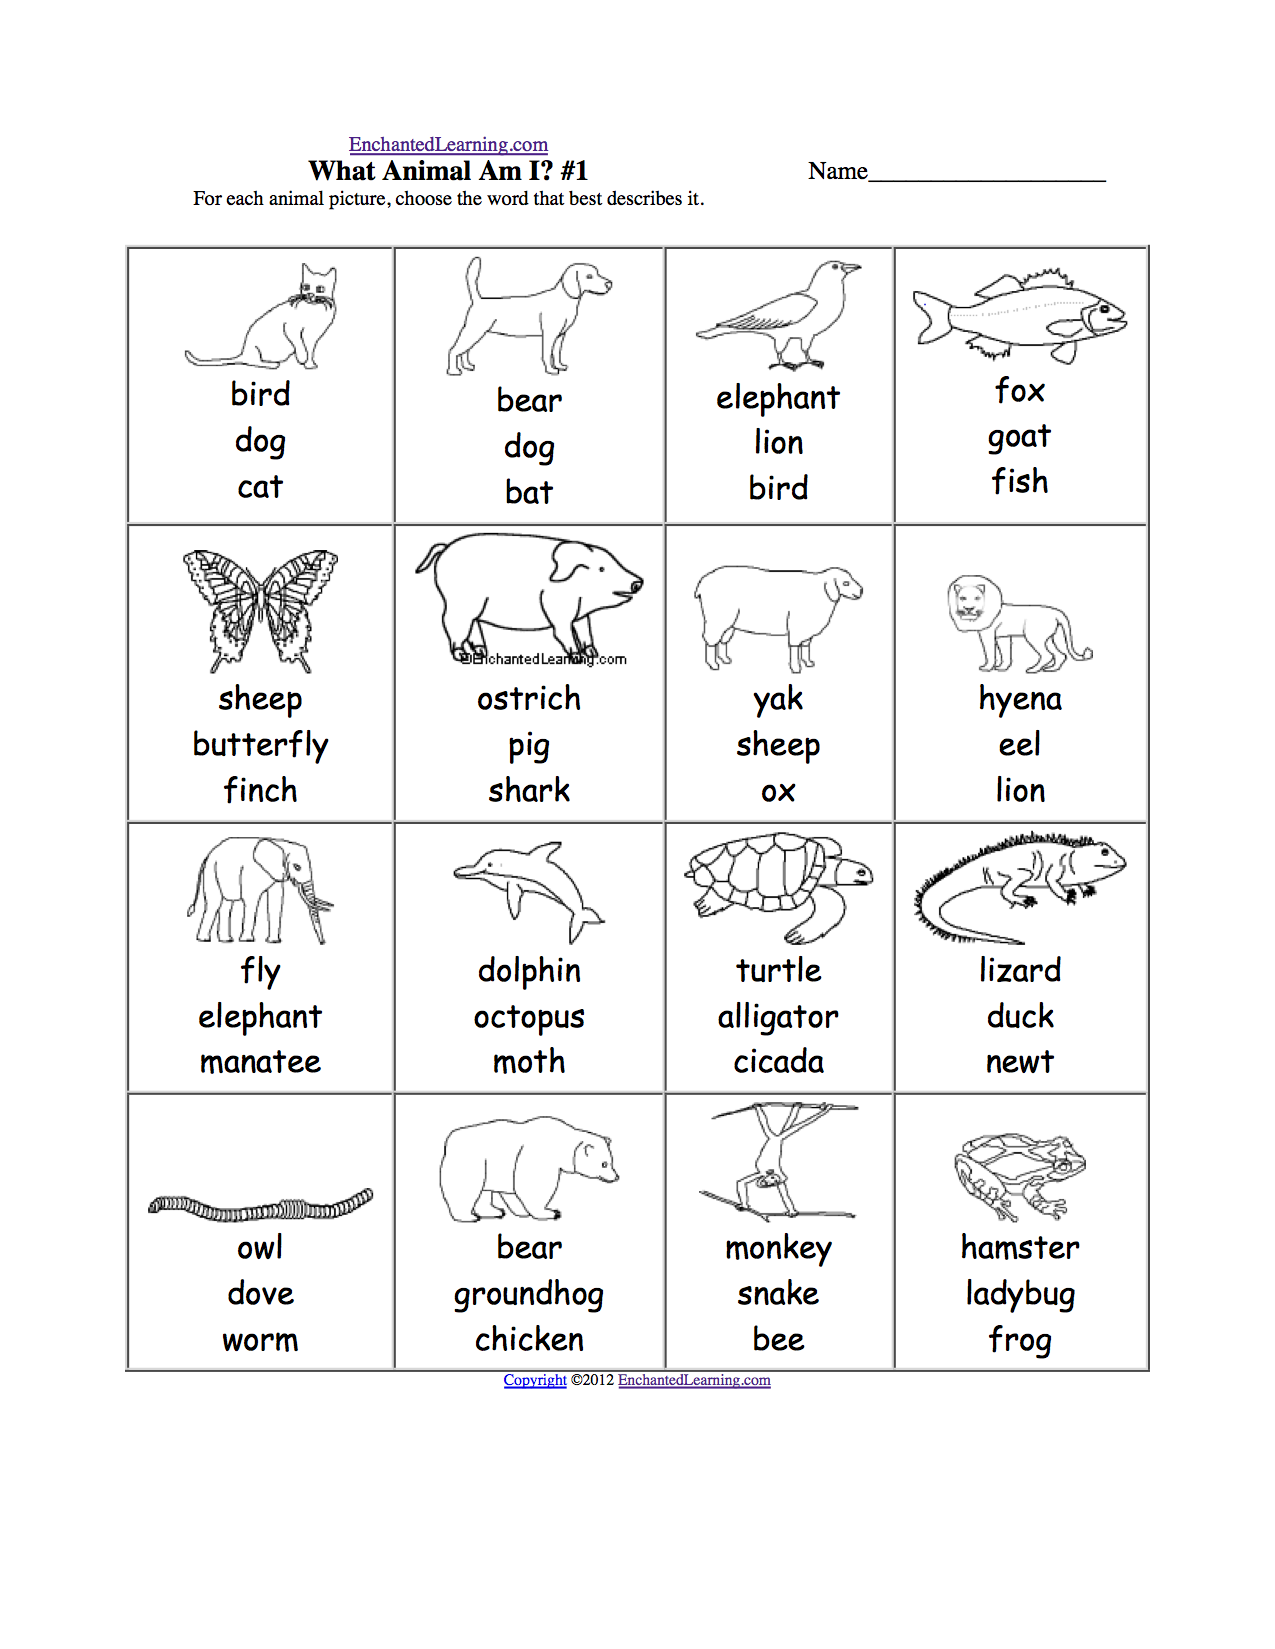 EnchantedLearning.com Spelling  play book Worksheets word sight at Animal